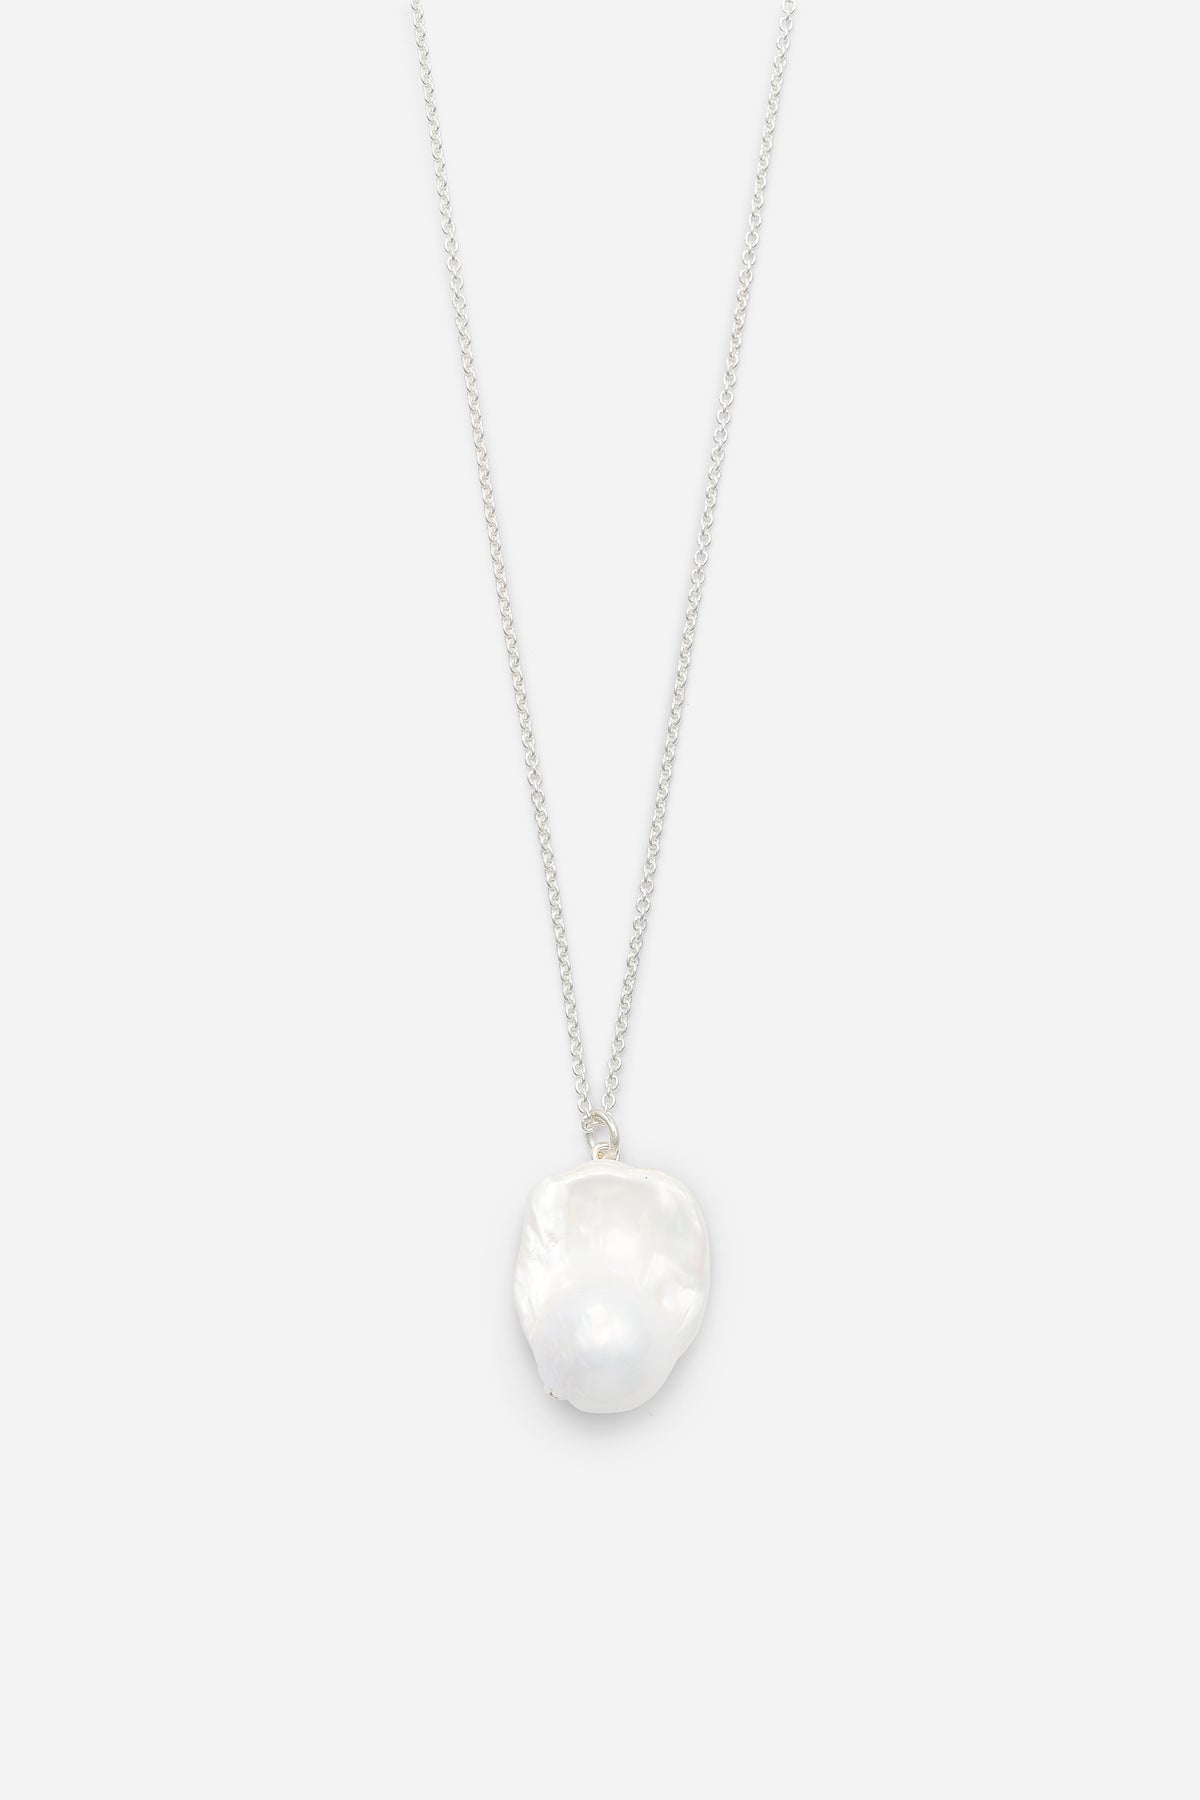 Sorelle ApS Barok necklace Necklace Sterling Silver